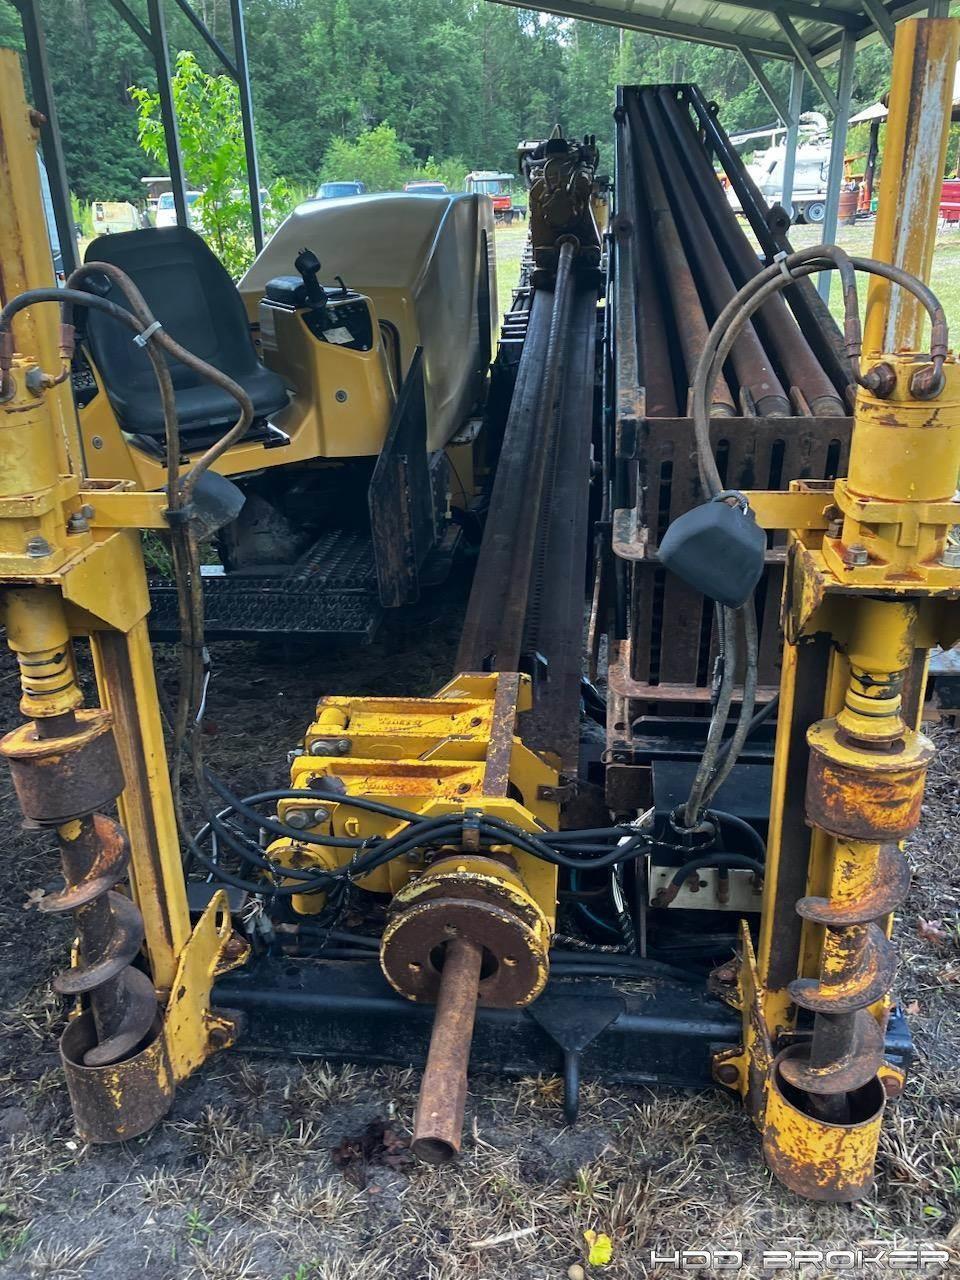 Vermeer D33x44 Horizontal drilling rigs